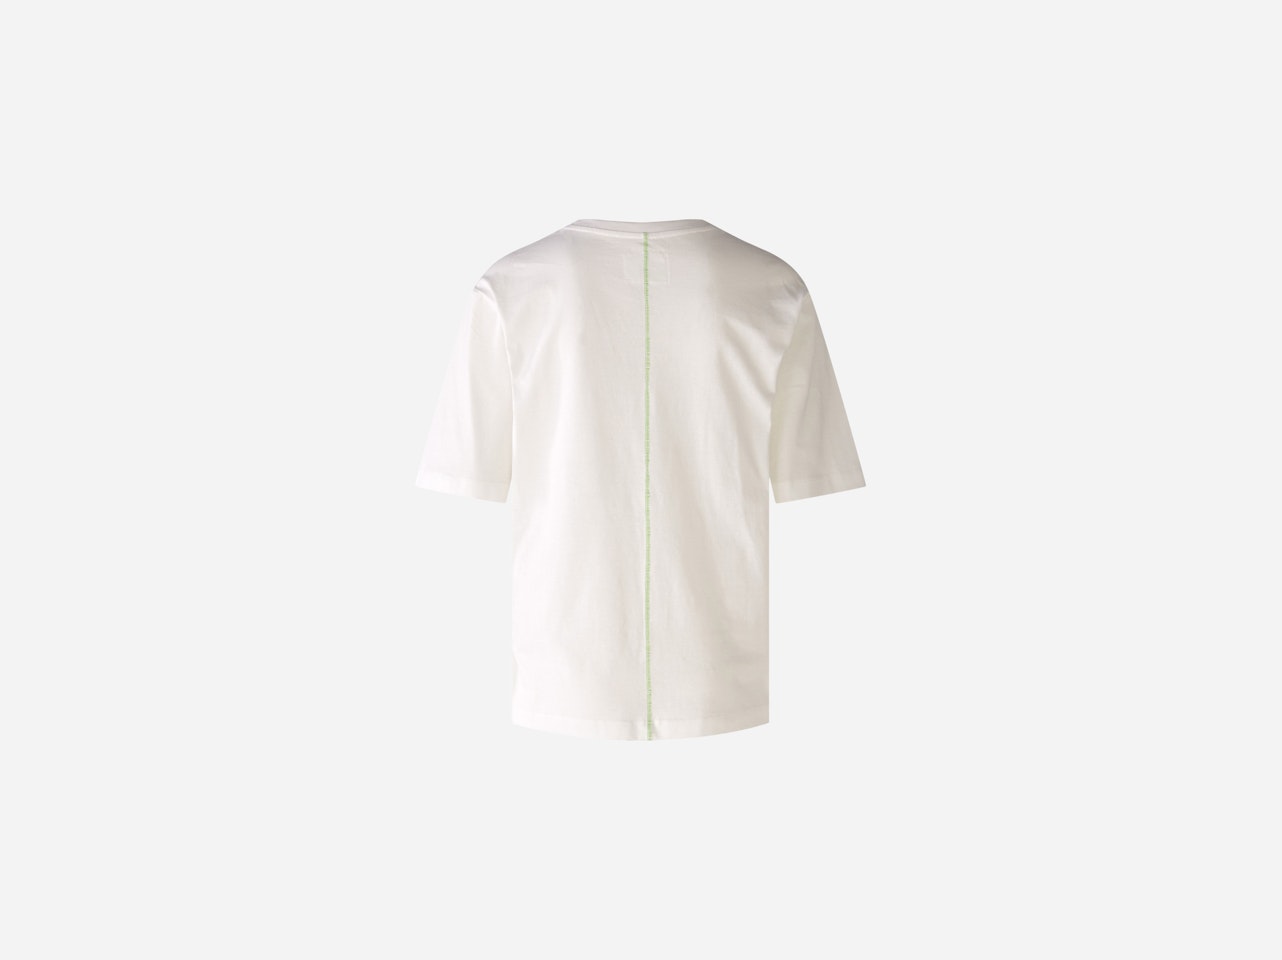 Bild 7 von T-shirt made from 100% organic cotton in cloud dancer | Oui